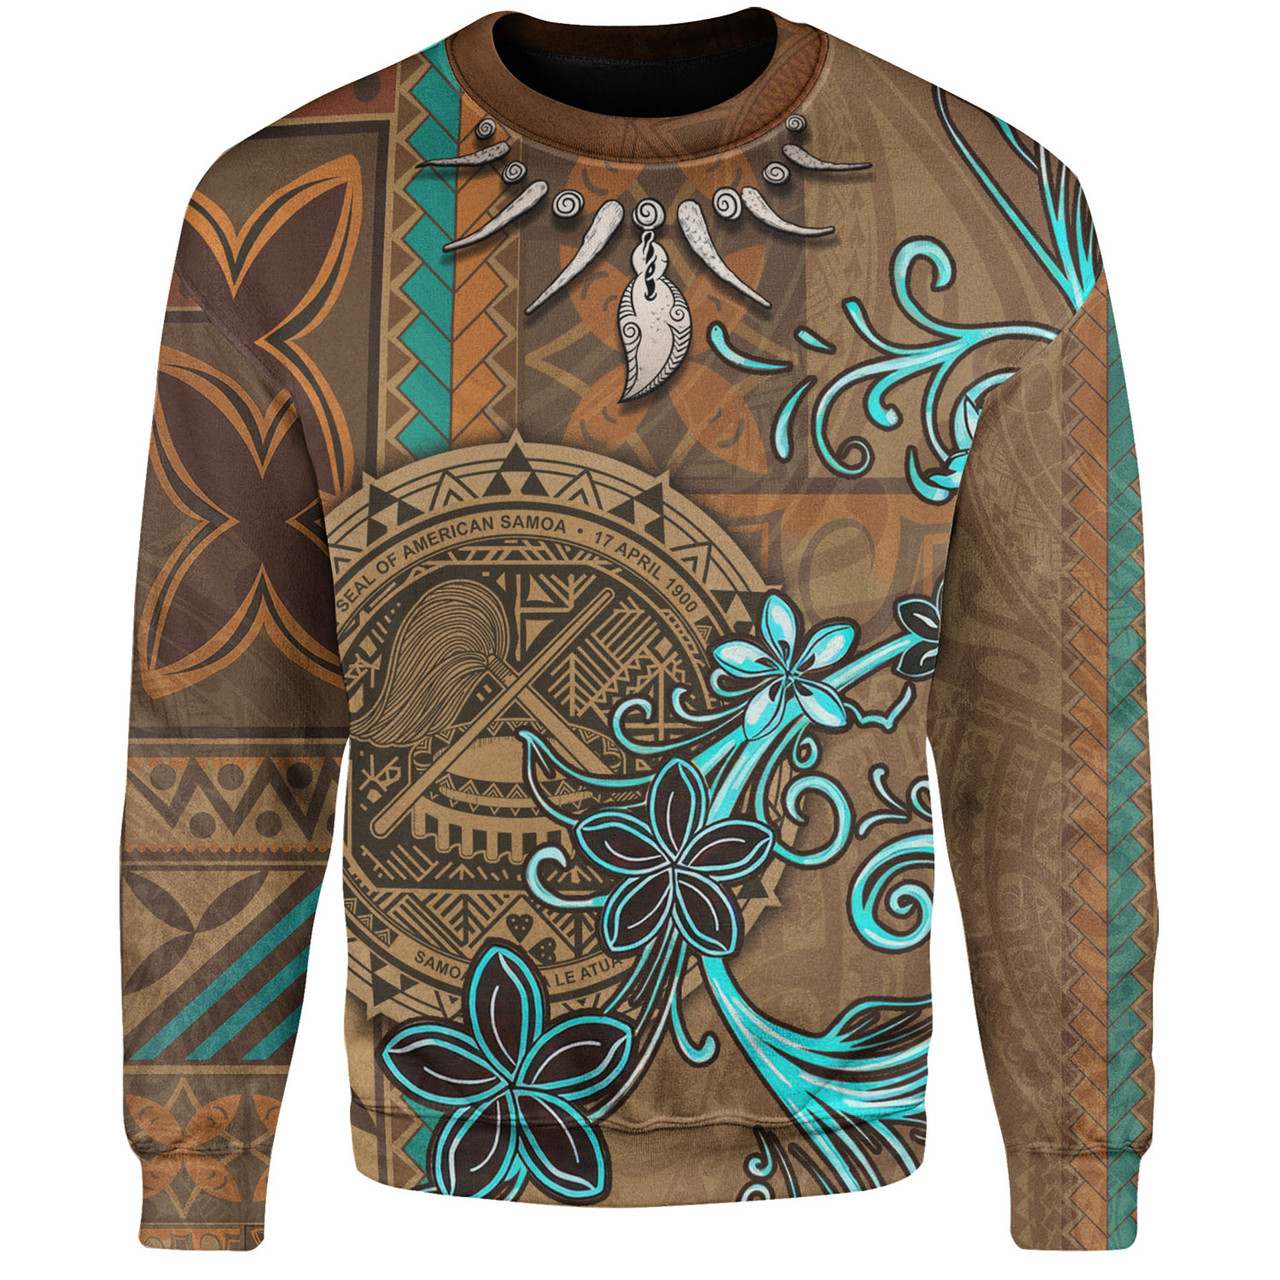 American Samoa Sweatshirt Polynesian Pattern Motif And Teal Boar Tusk